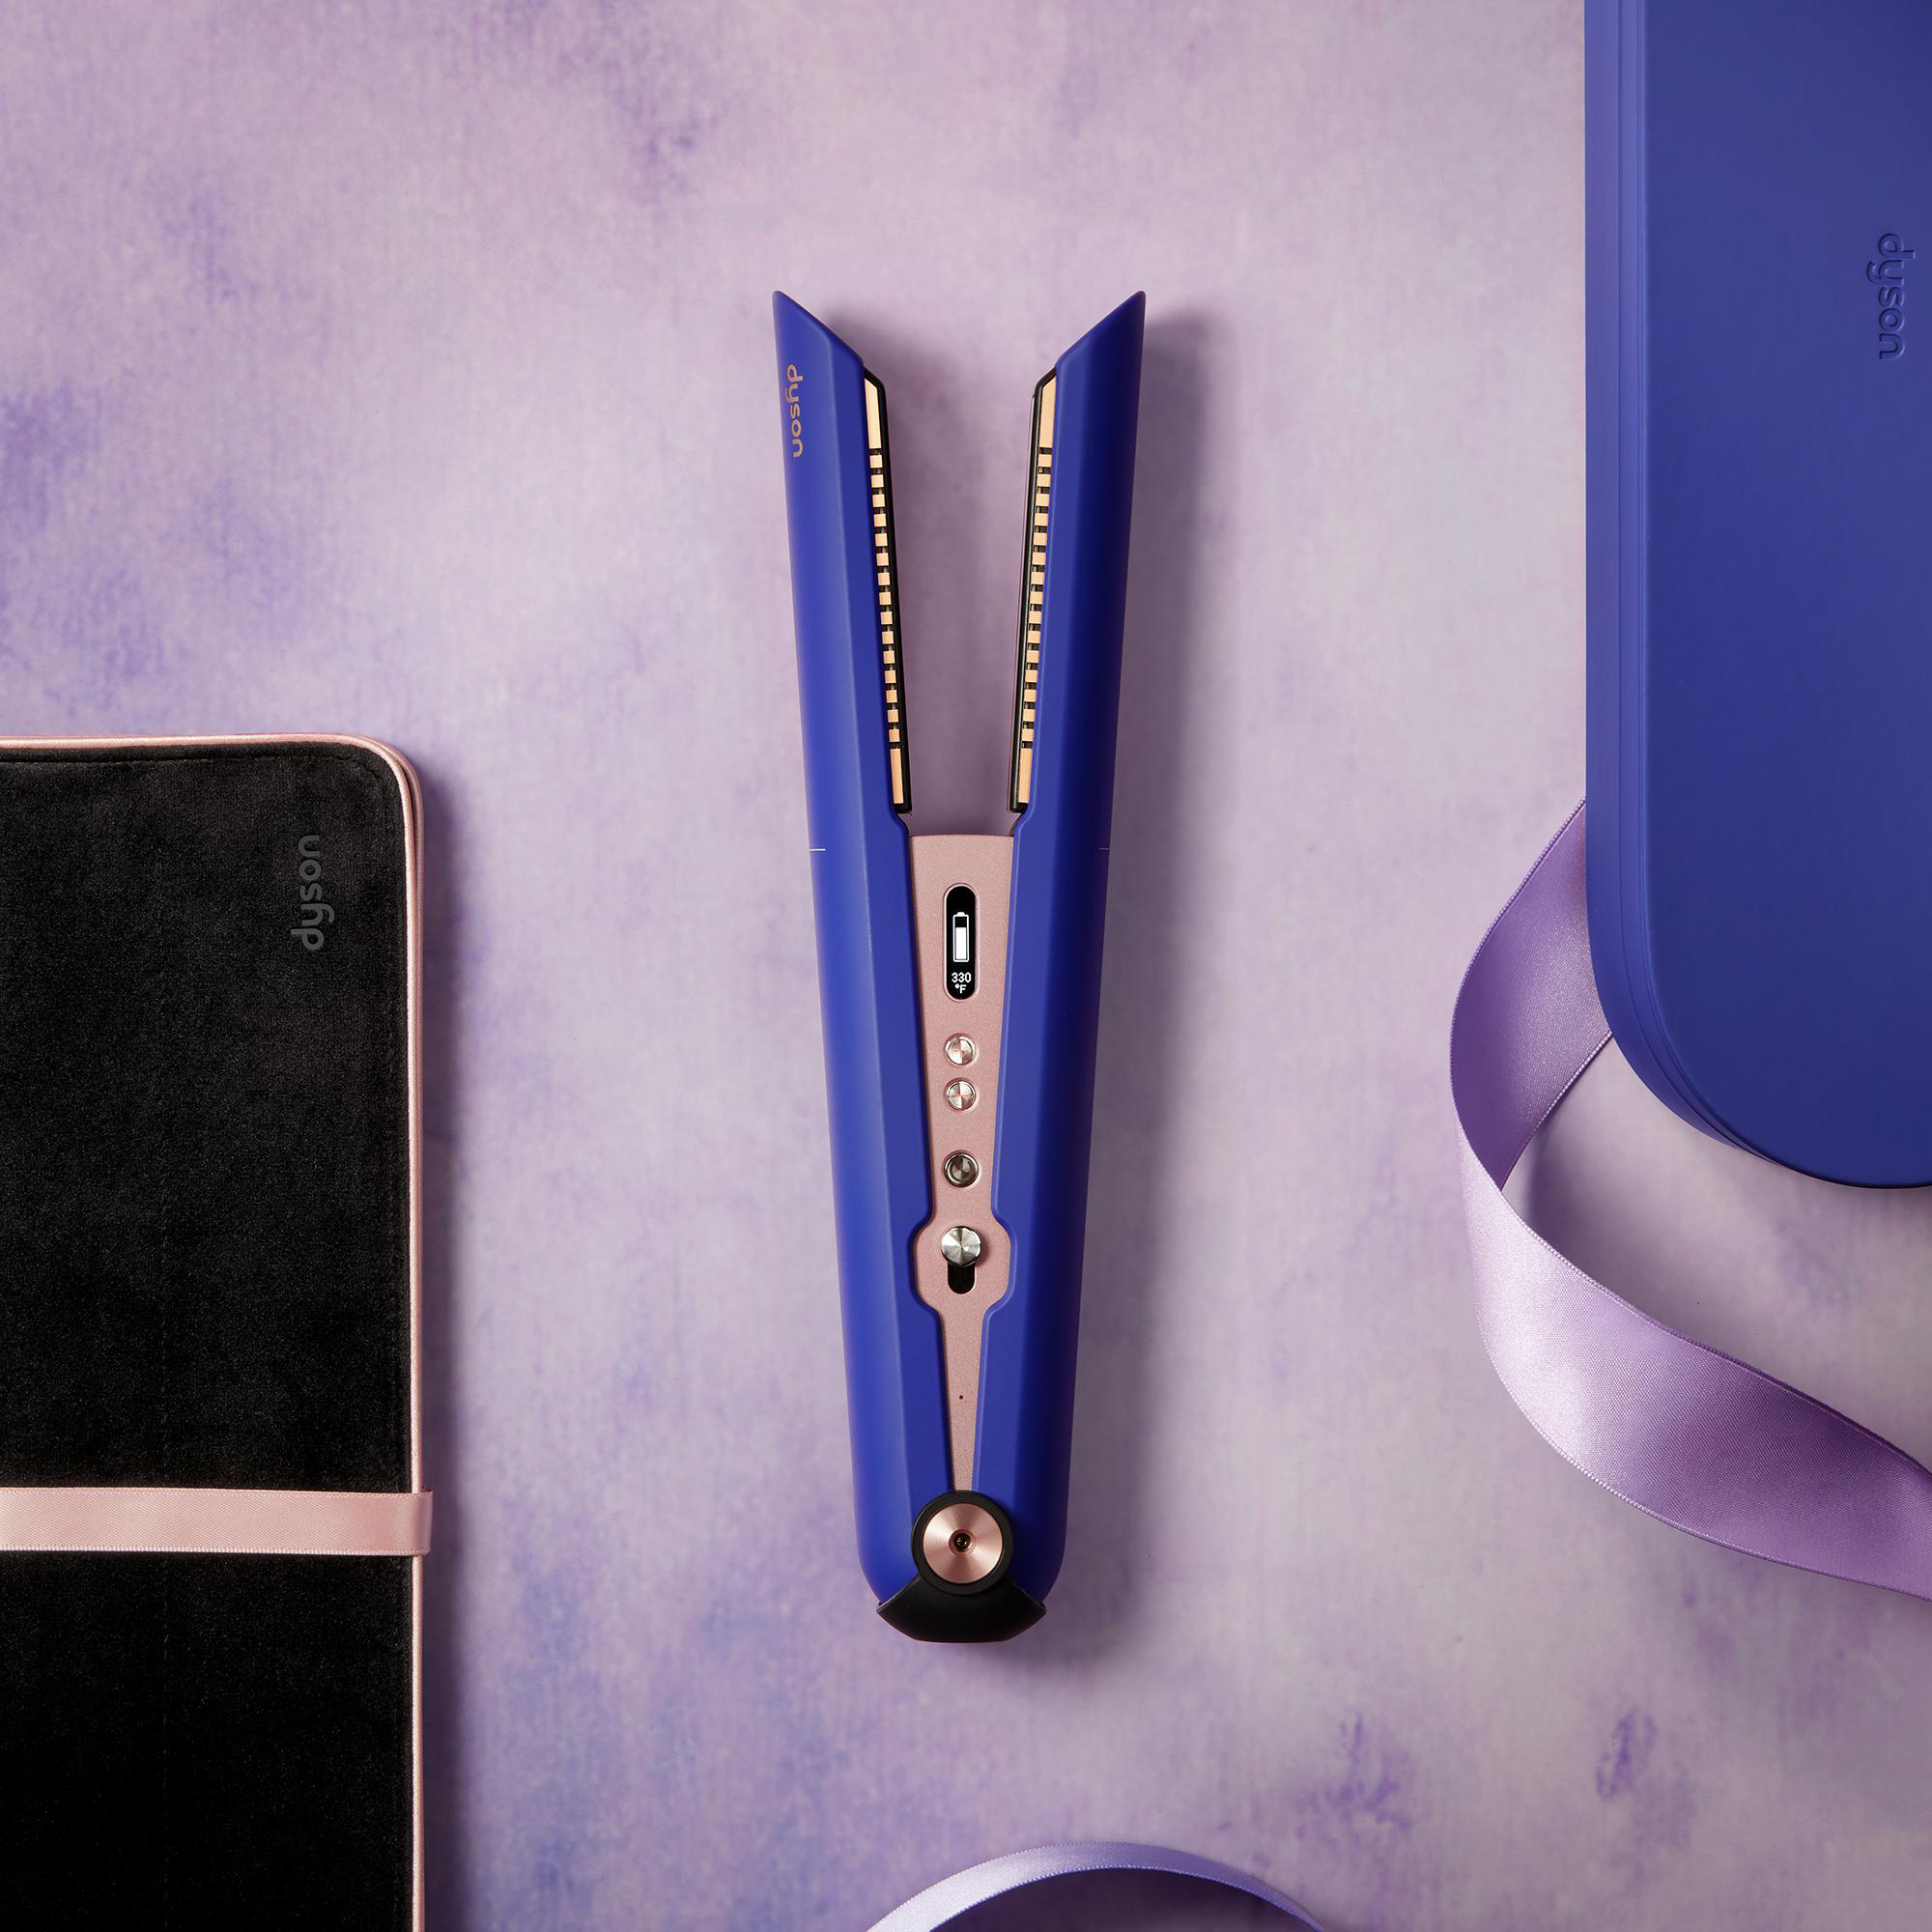 Corrale™ DYSON - Gifting Violettblau/Rosé Haarglätter, Edition Beschichtung: Kupfer-Mangan